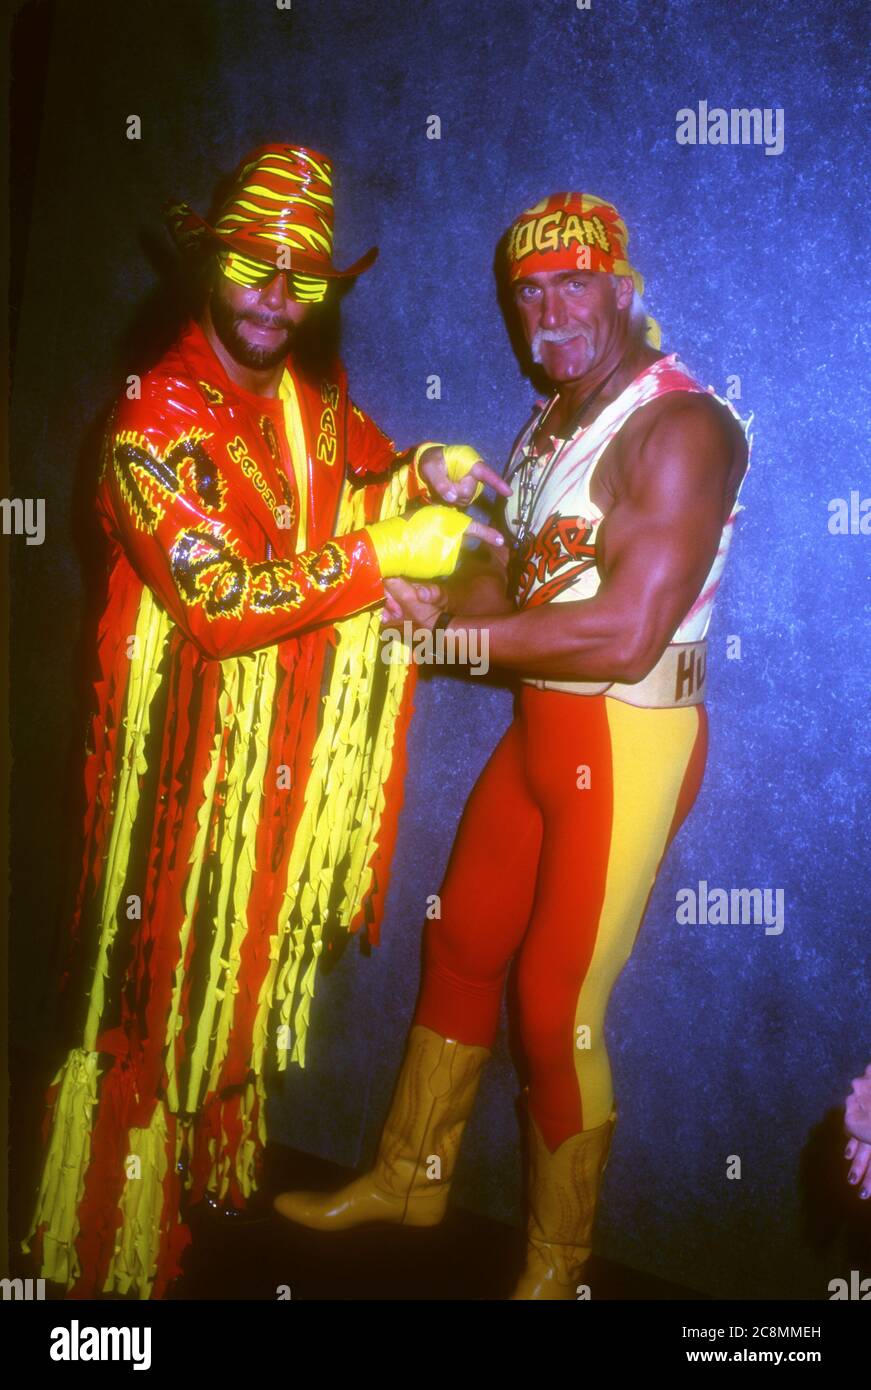 Las Vegas, Nevada, USA 23rd January 1996 WWF Wrestlers Randy 'Macho Man'  Savage and Hulk Hogan